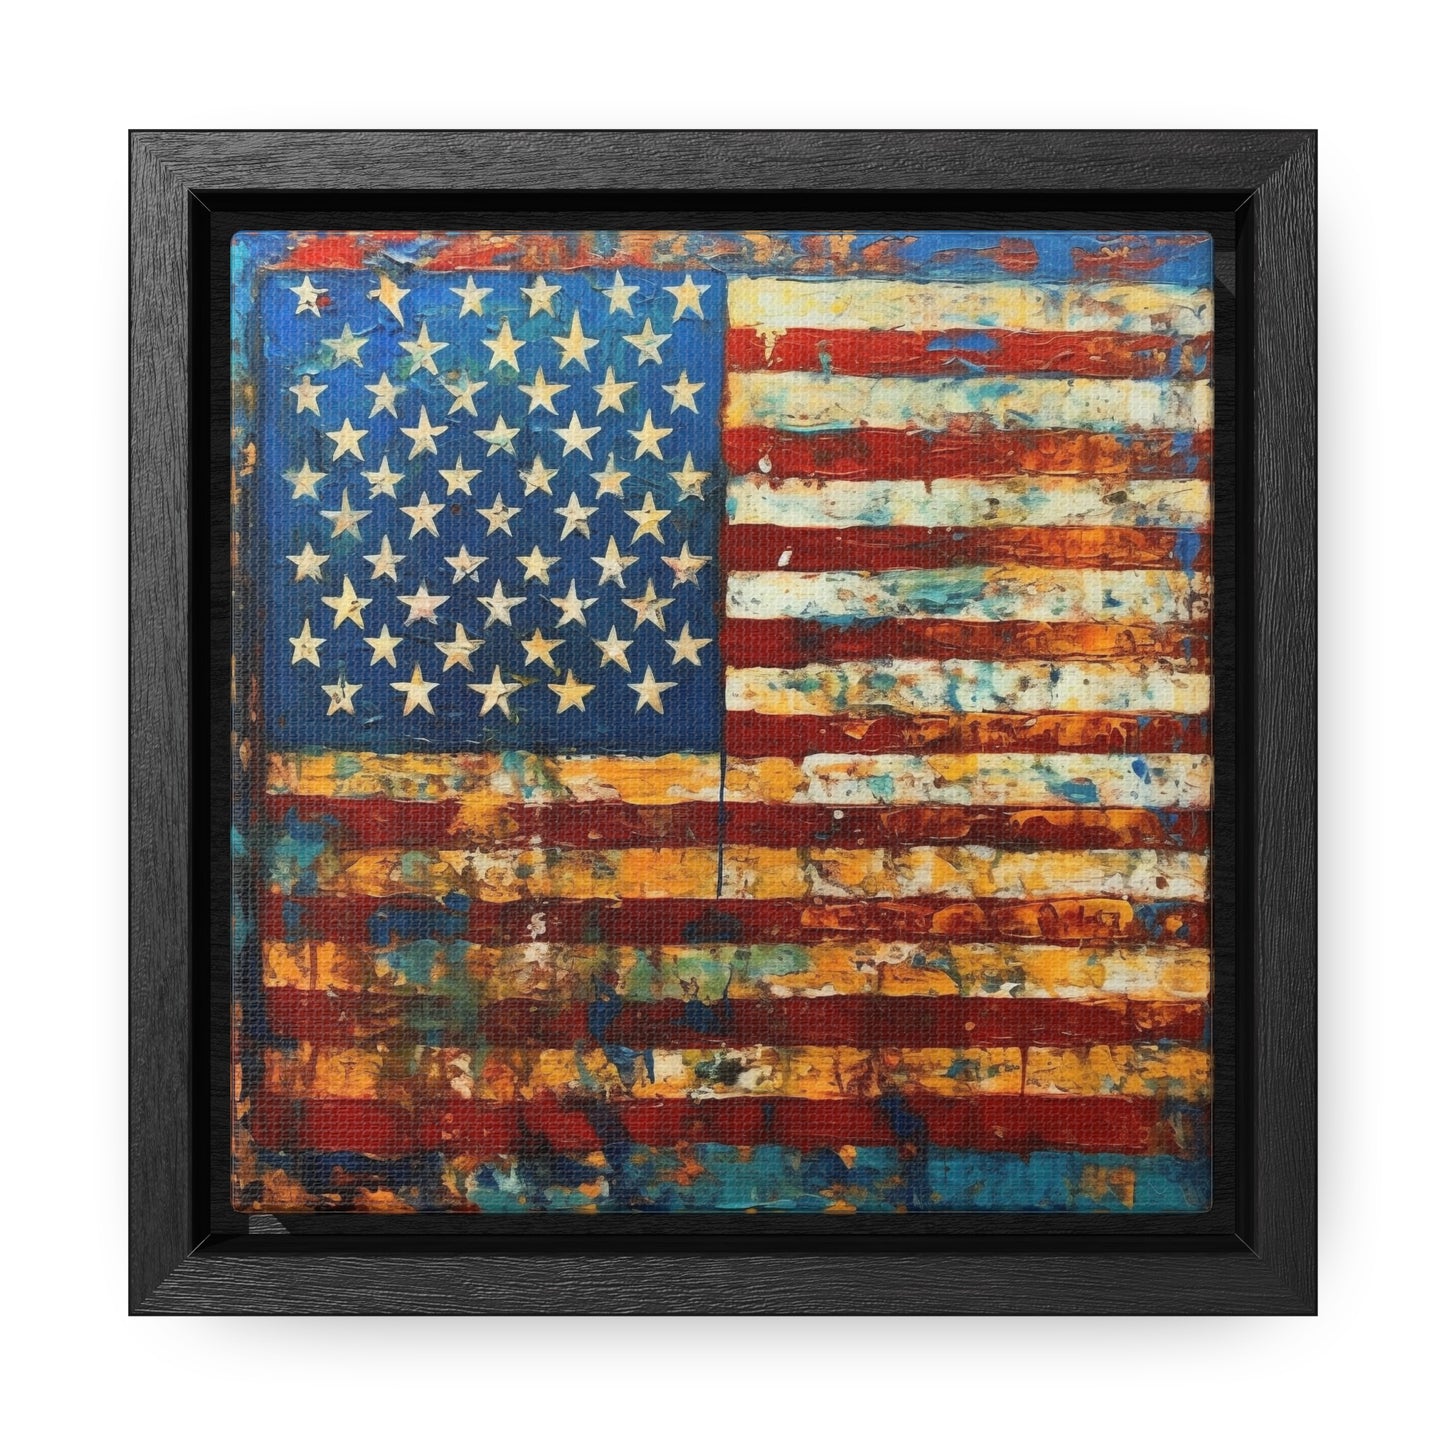 USA 15, Gallery Canvas Wraps, Square Frame